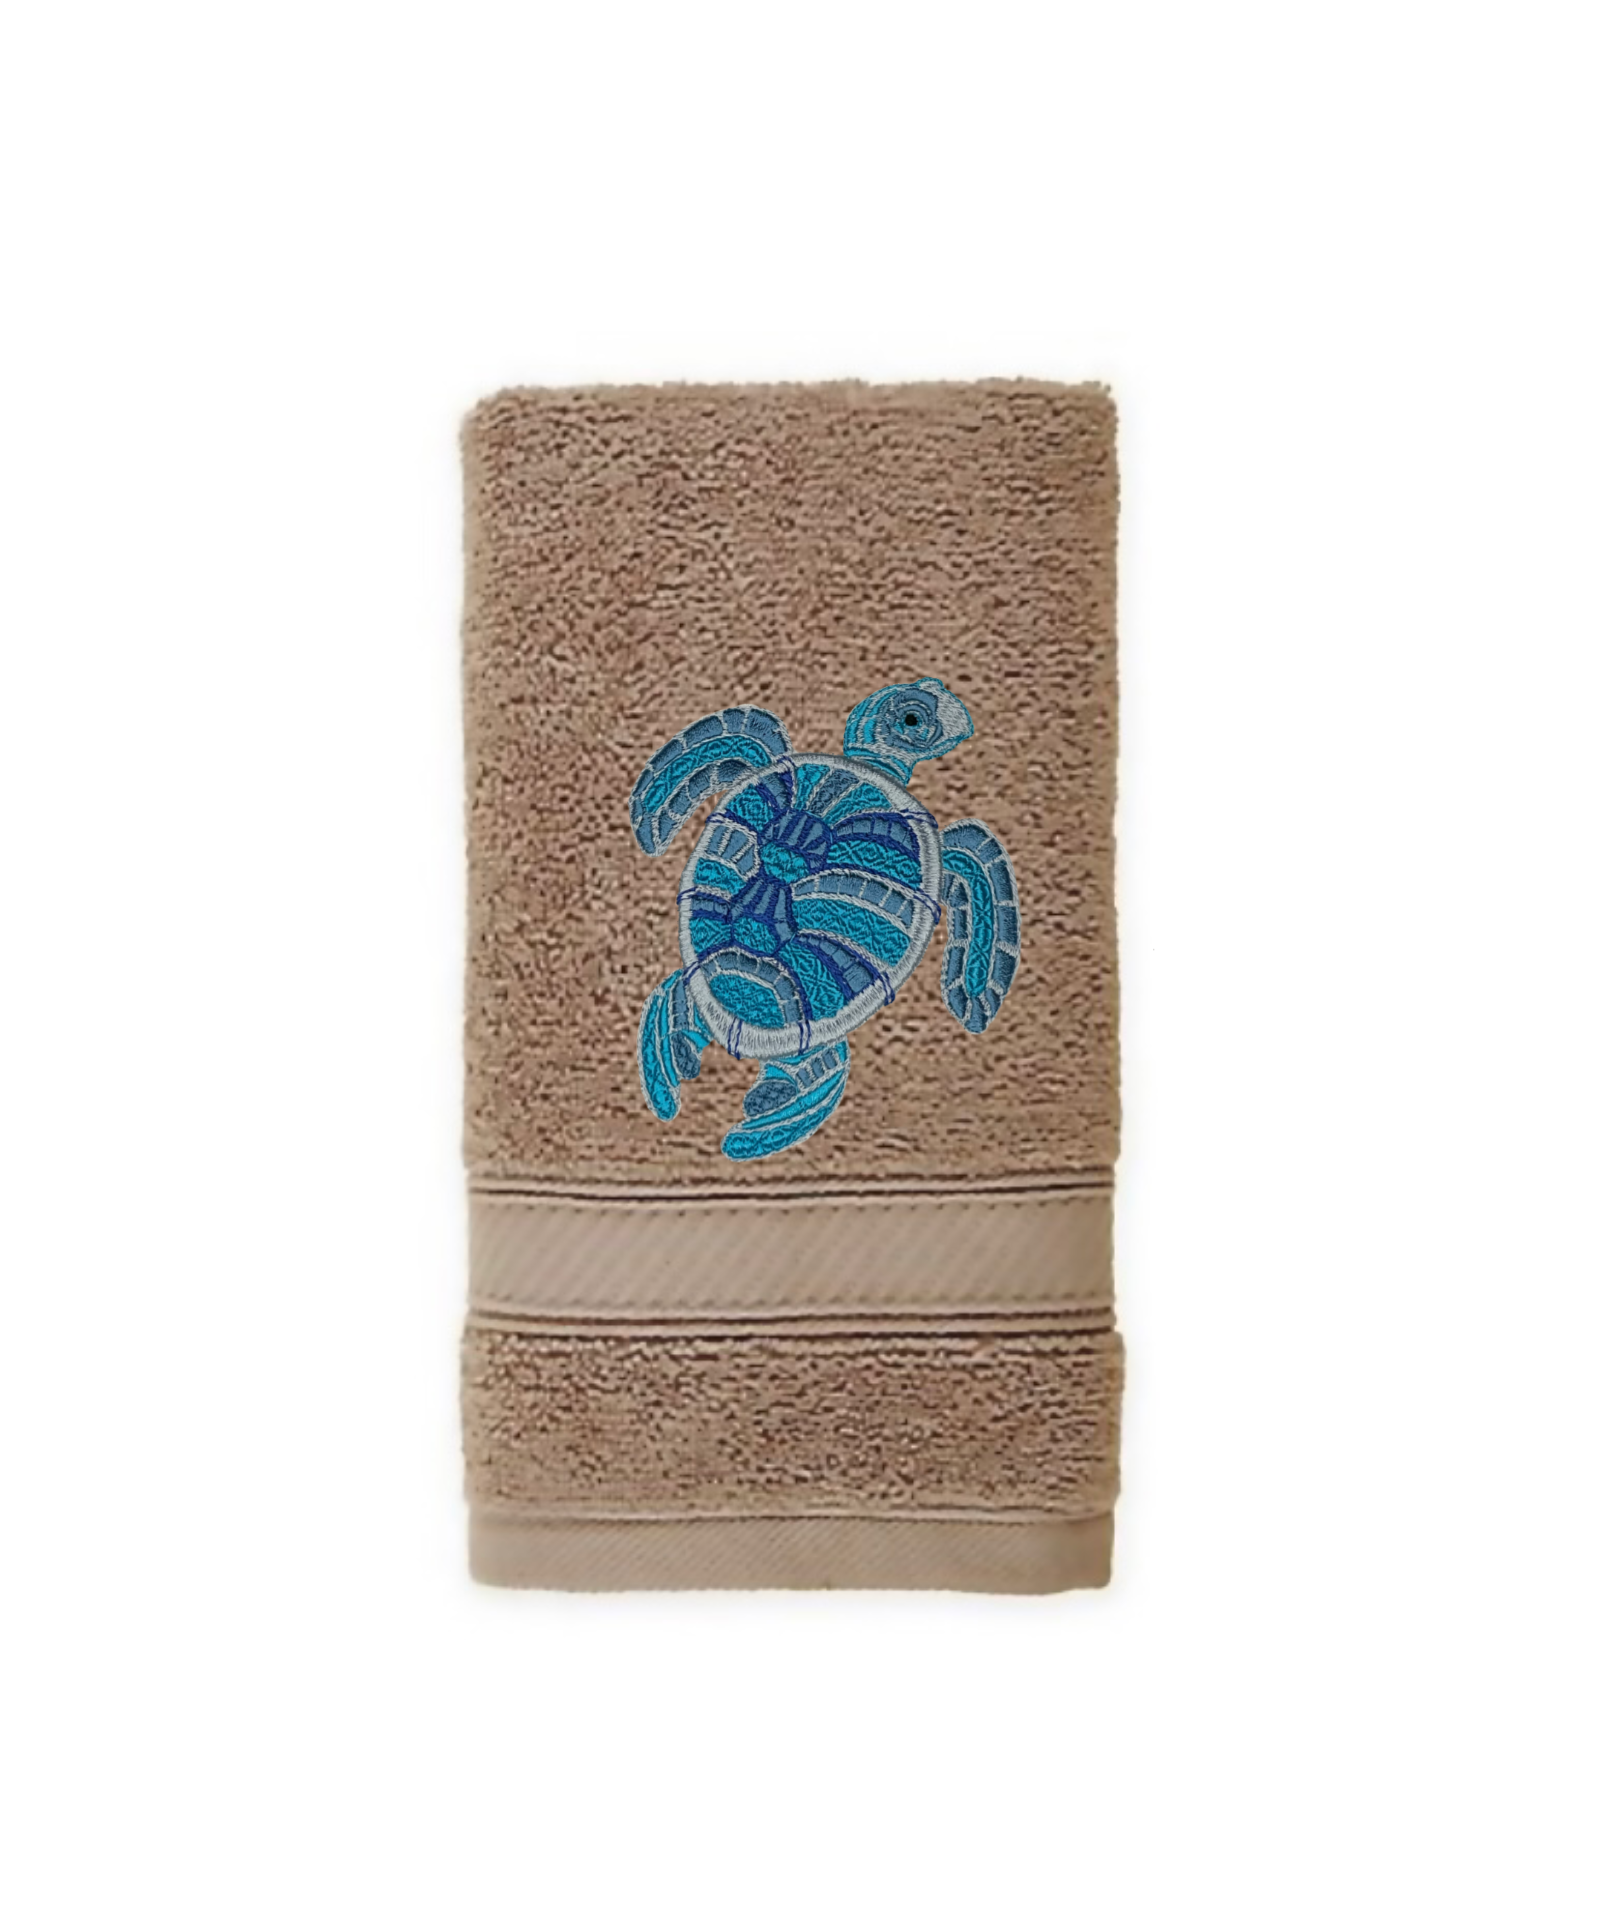 Embroidered Hand Towel Sea Turtle. Beautifully Detailed Sea Turtle